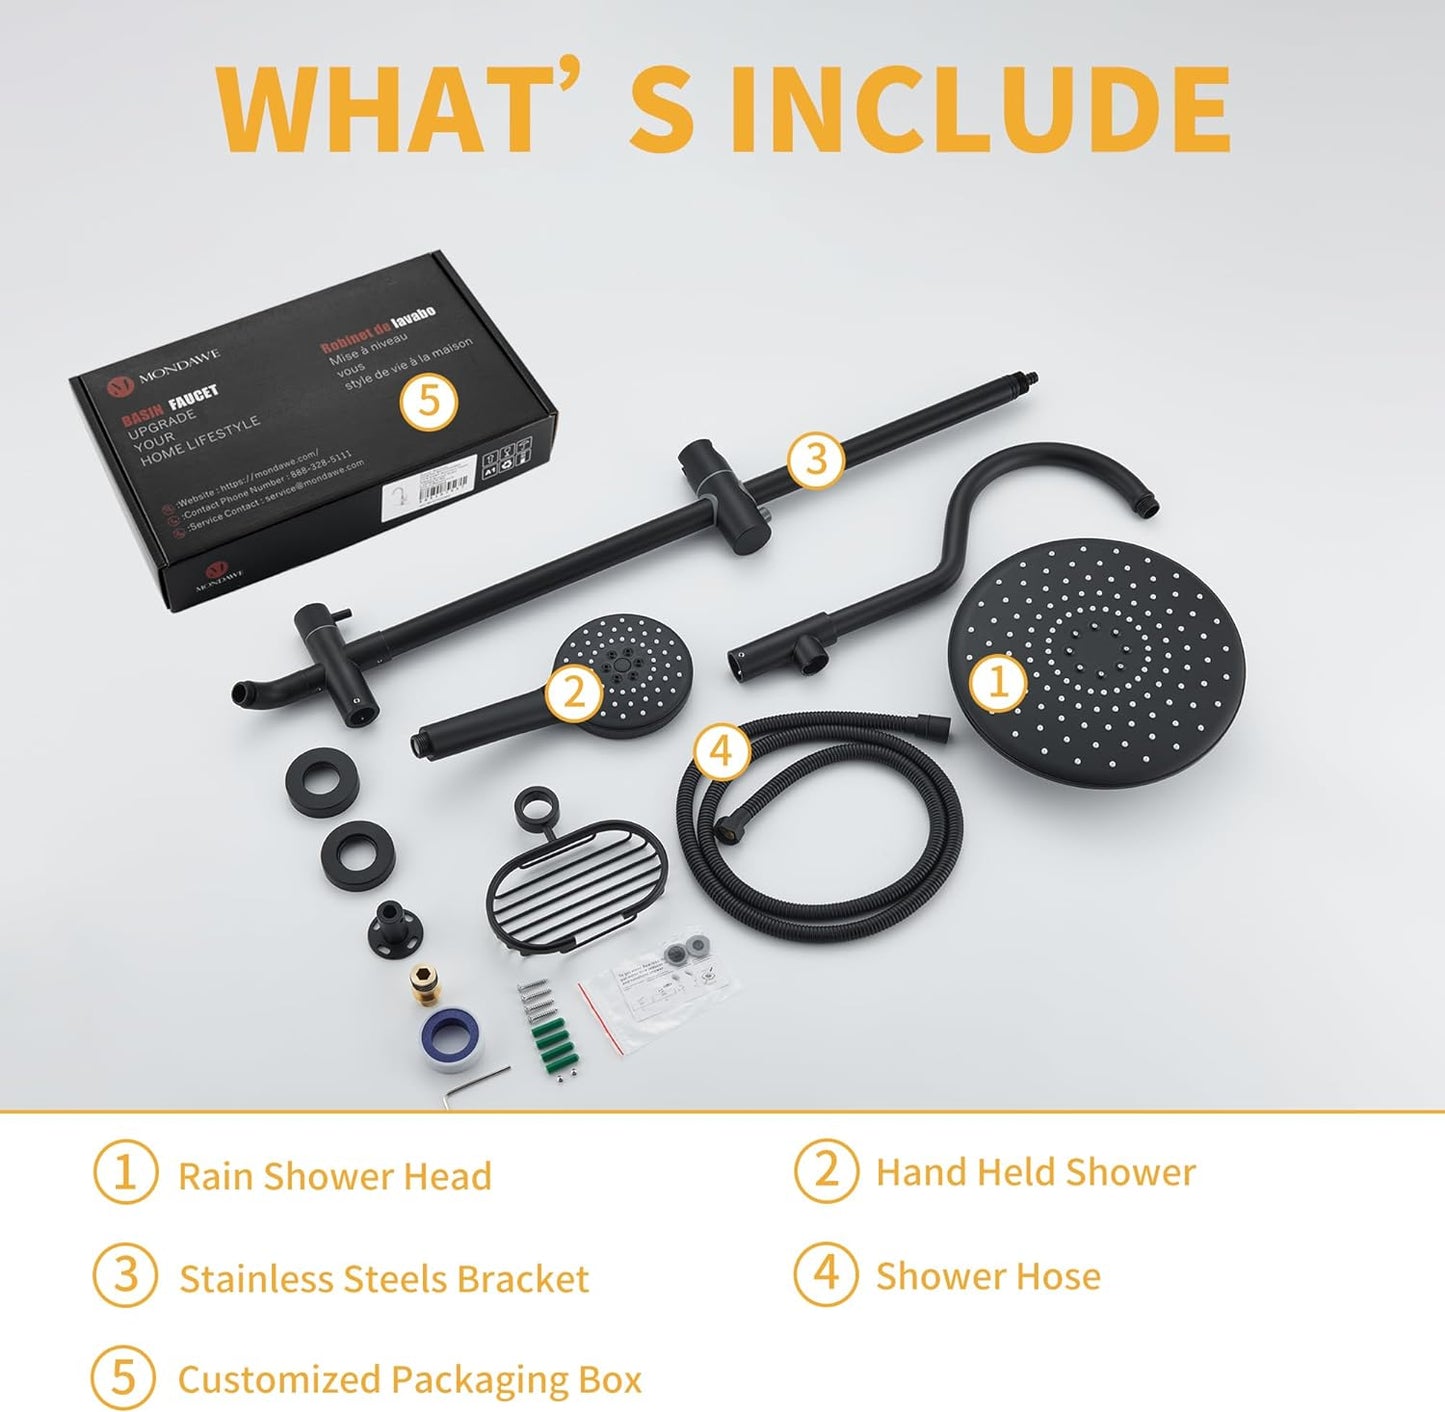 MONDAWE Exposed Shower System 8-Inch Matte Black Shower Head with Handheld Sprayer 3-Setting, Slid Bar Shower System